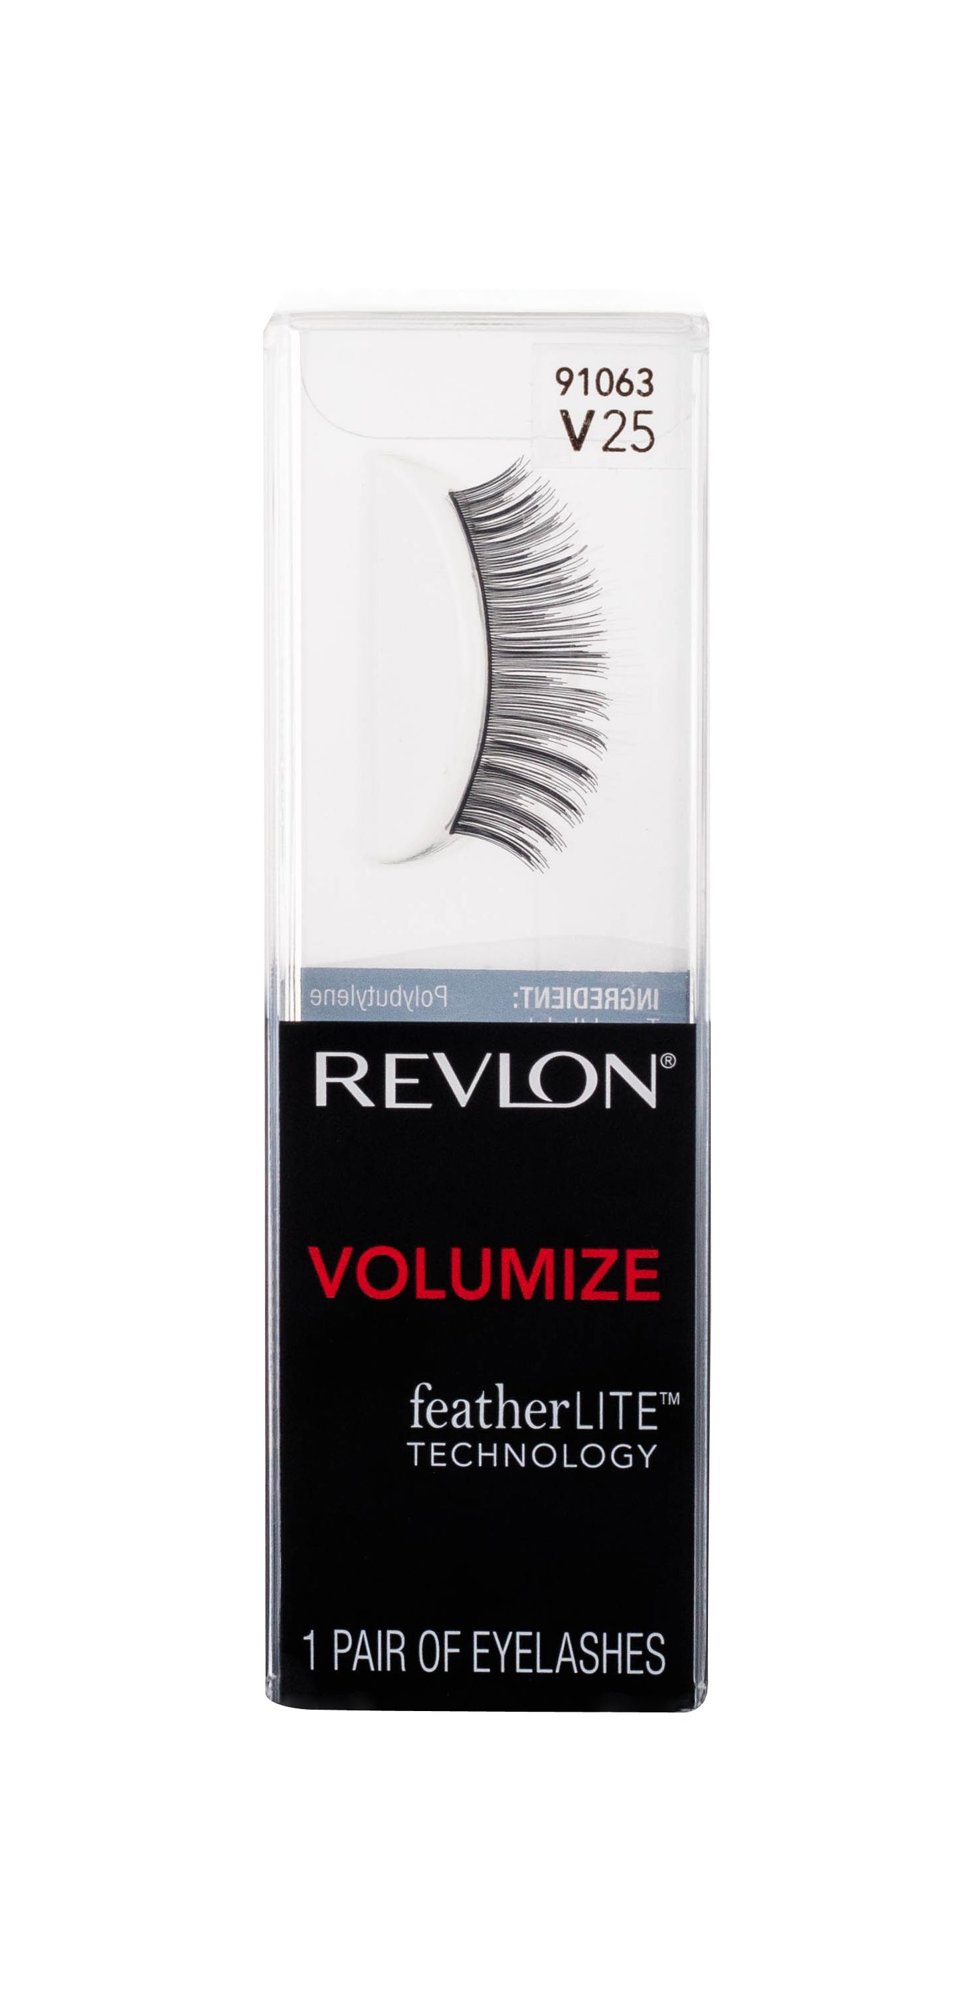 Revlon Volumize featherLITE Technology dirbtinės blakstienos